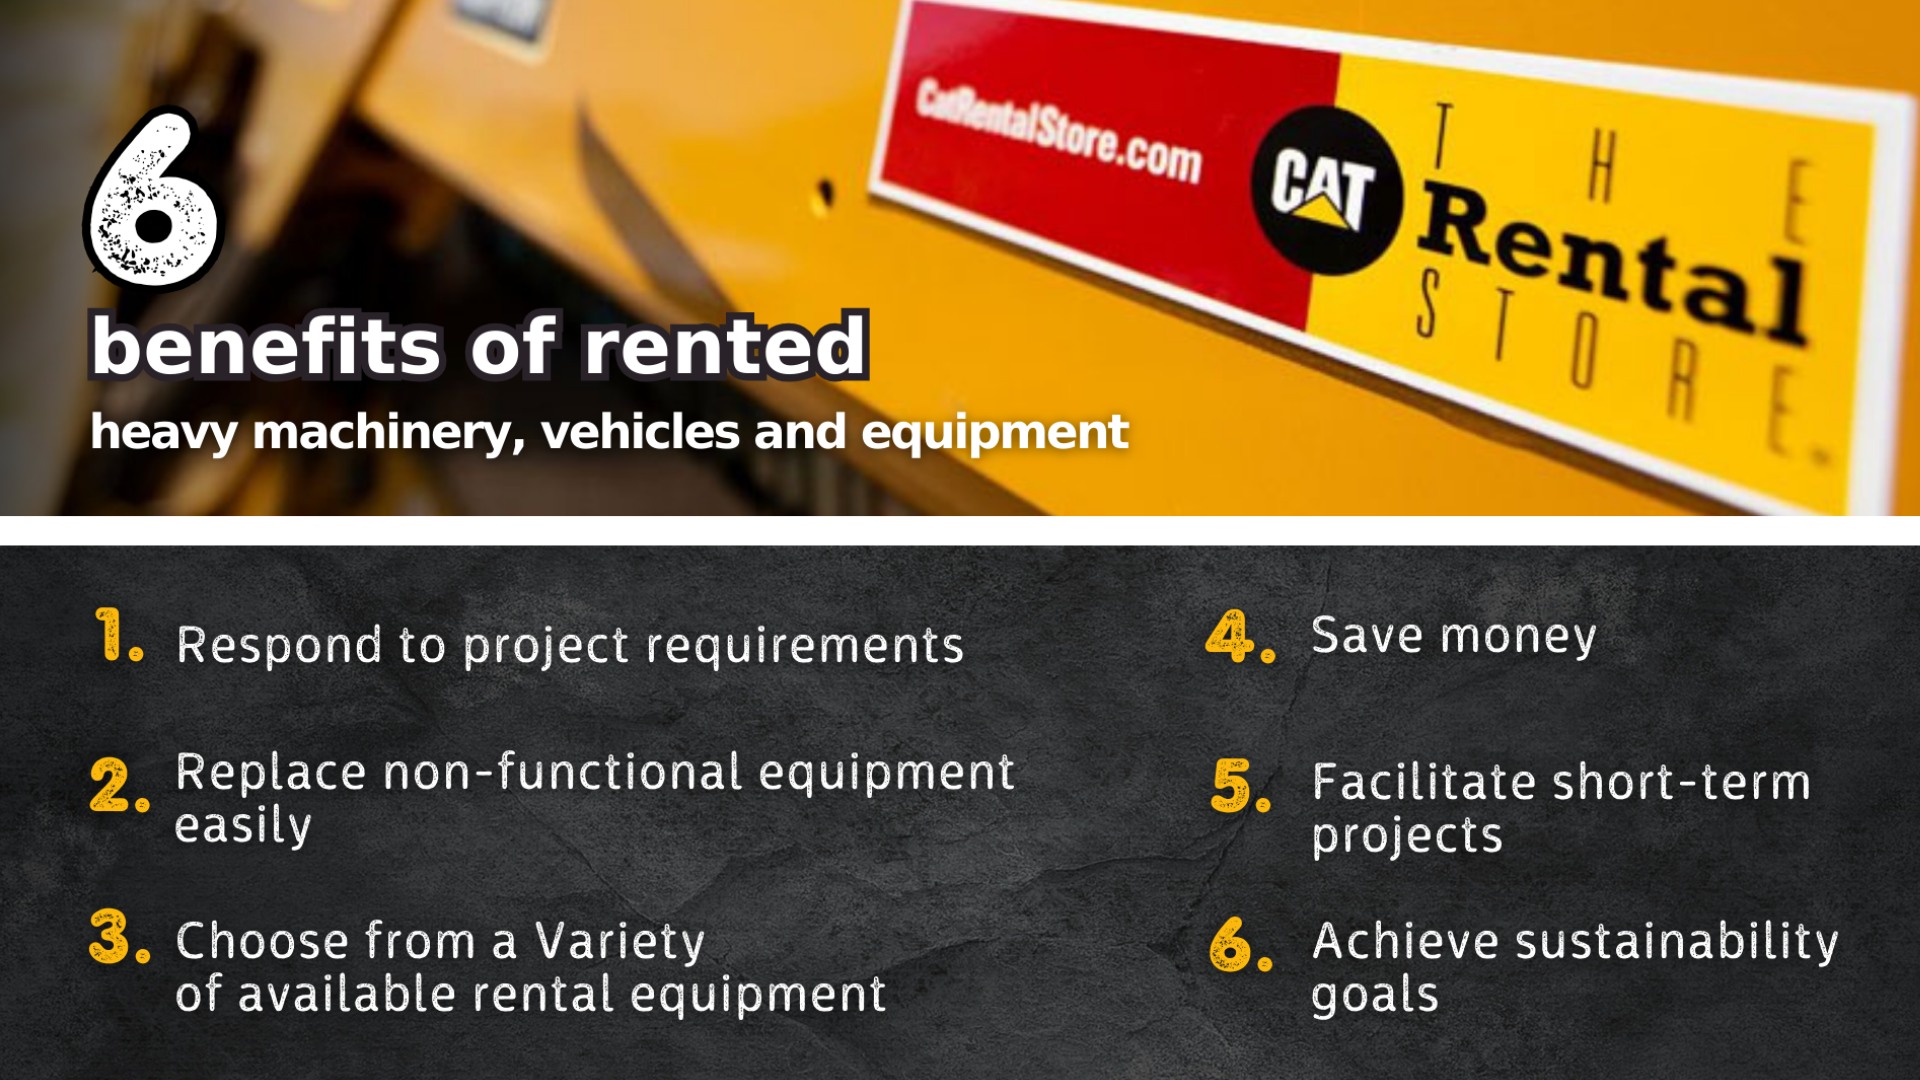 benefits-of-renting-caterpillar-equipment